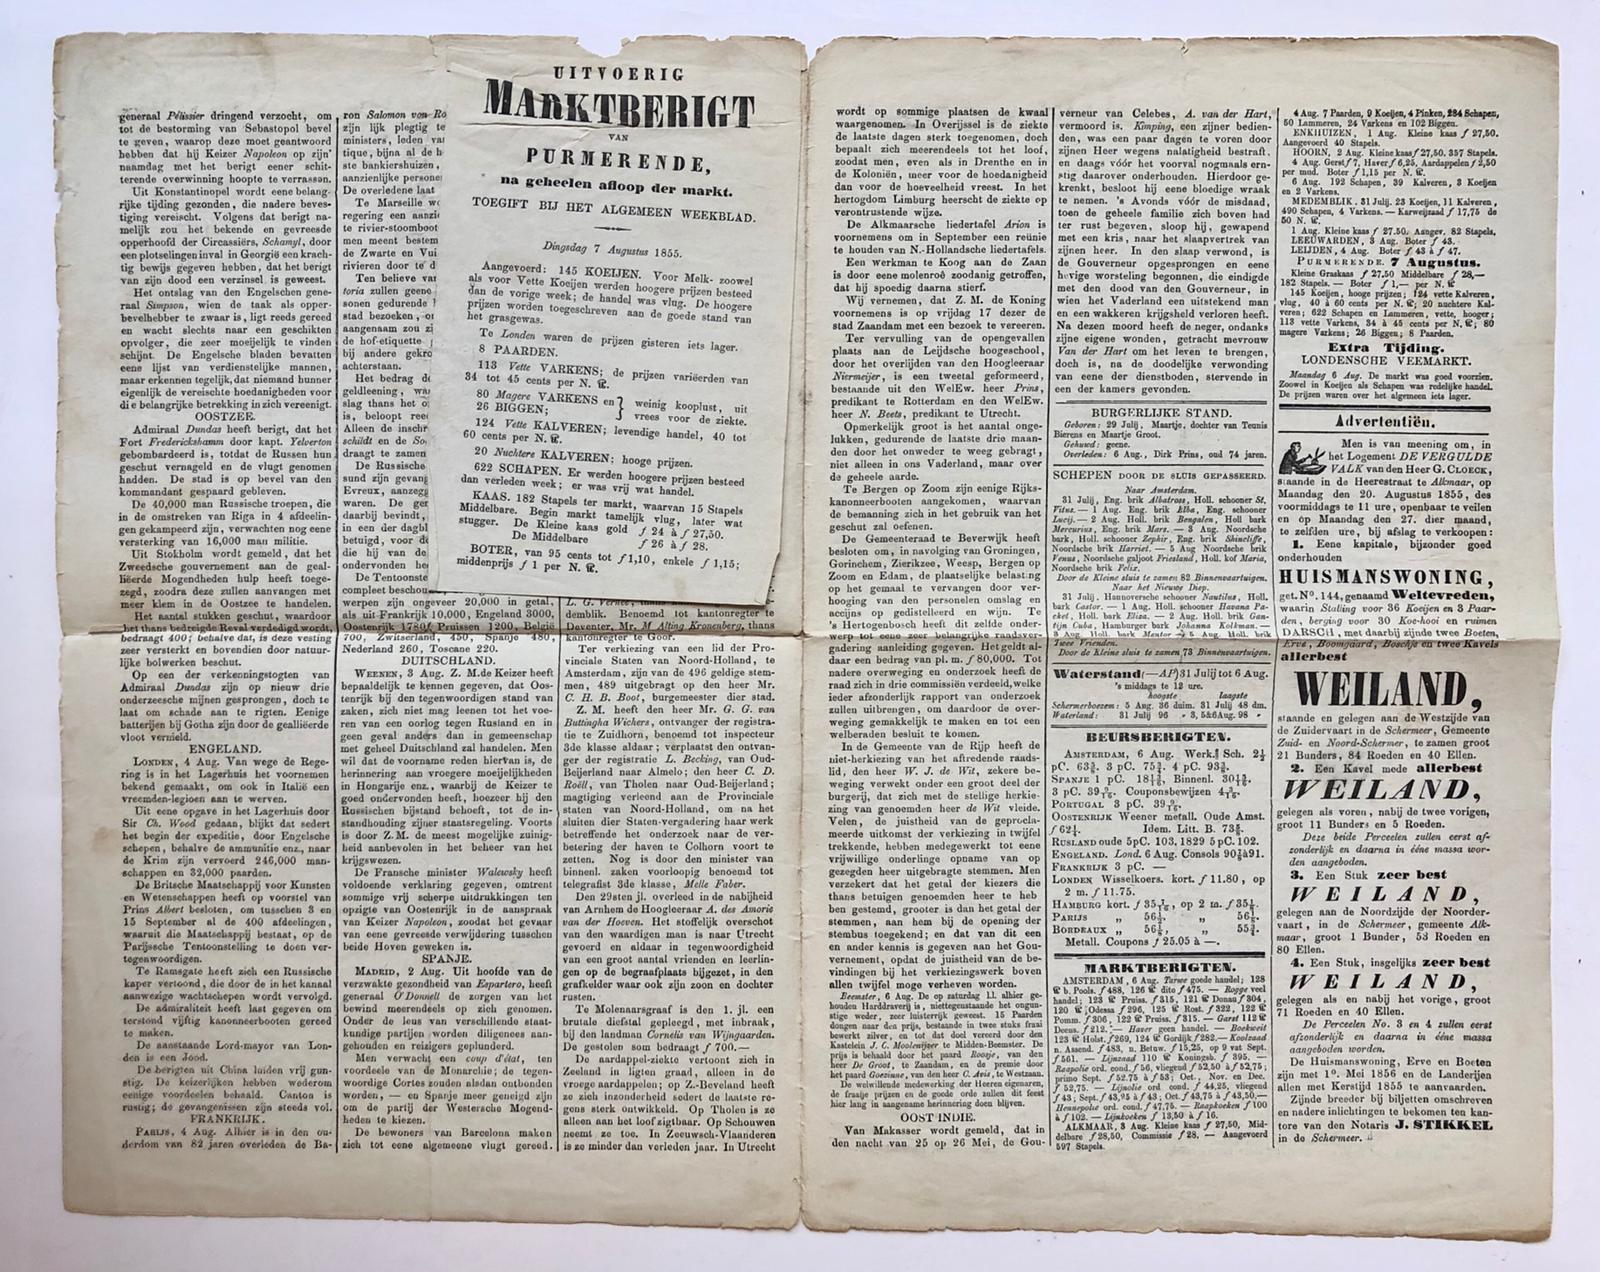 [NEWSPAPER, PURMEREND, MAKKES, 1855] Exemplaar van 1e- jaargang (1855) nr. 32 van het Algemeen Weekblad [...] uitgegeven te Purmerende. Gedrukt, 4p met een toegift.